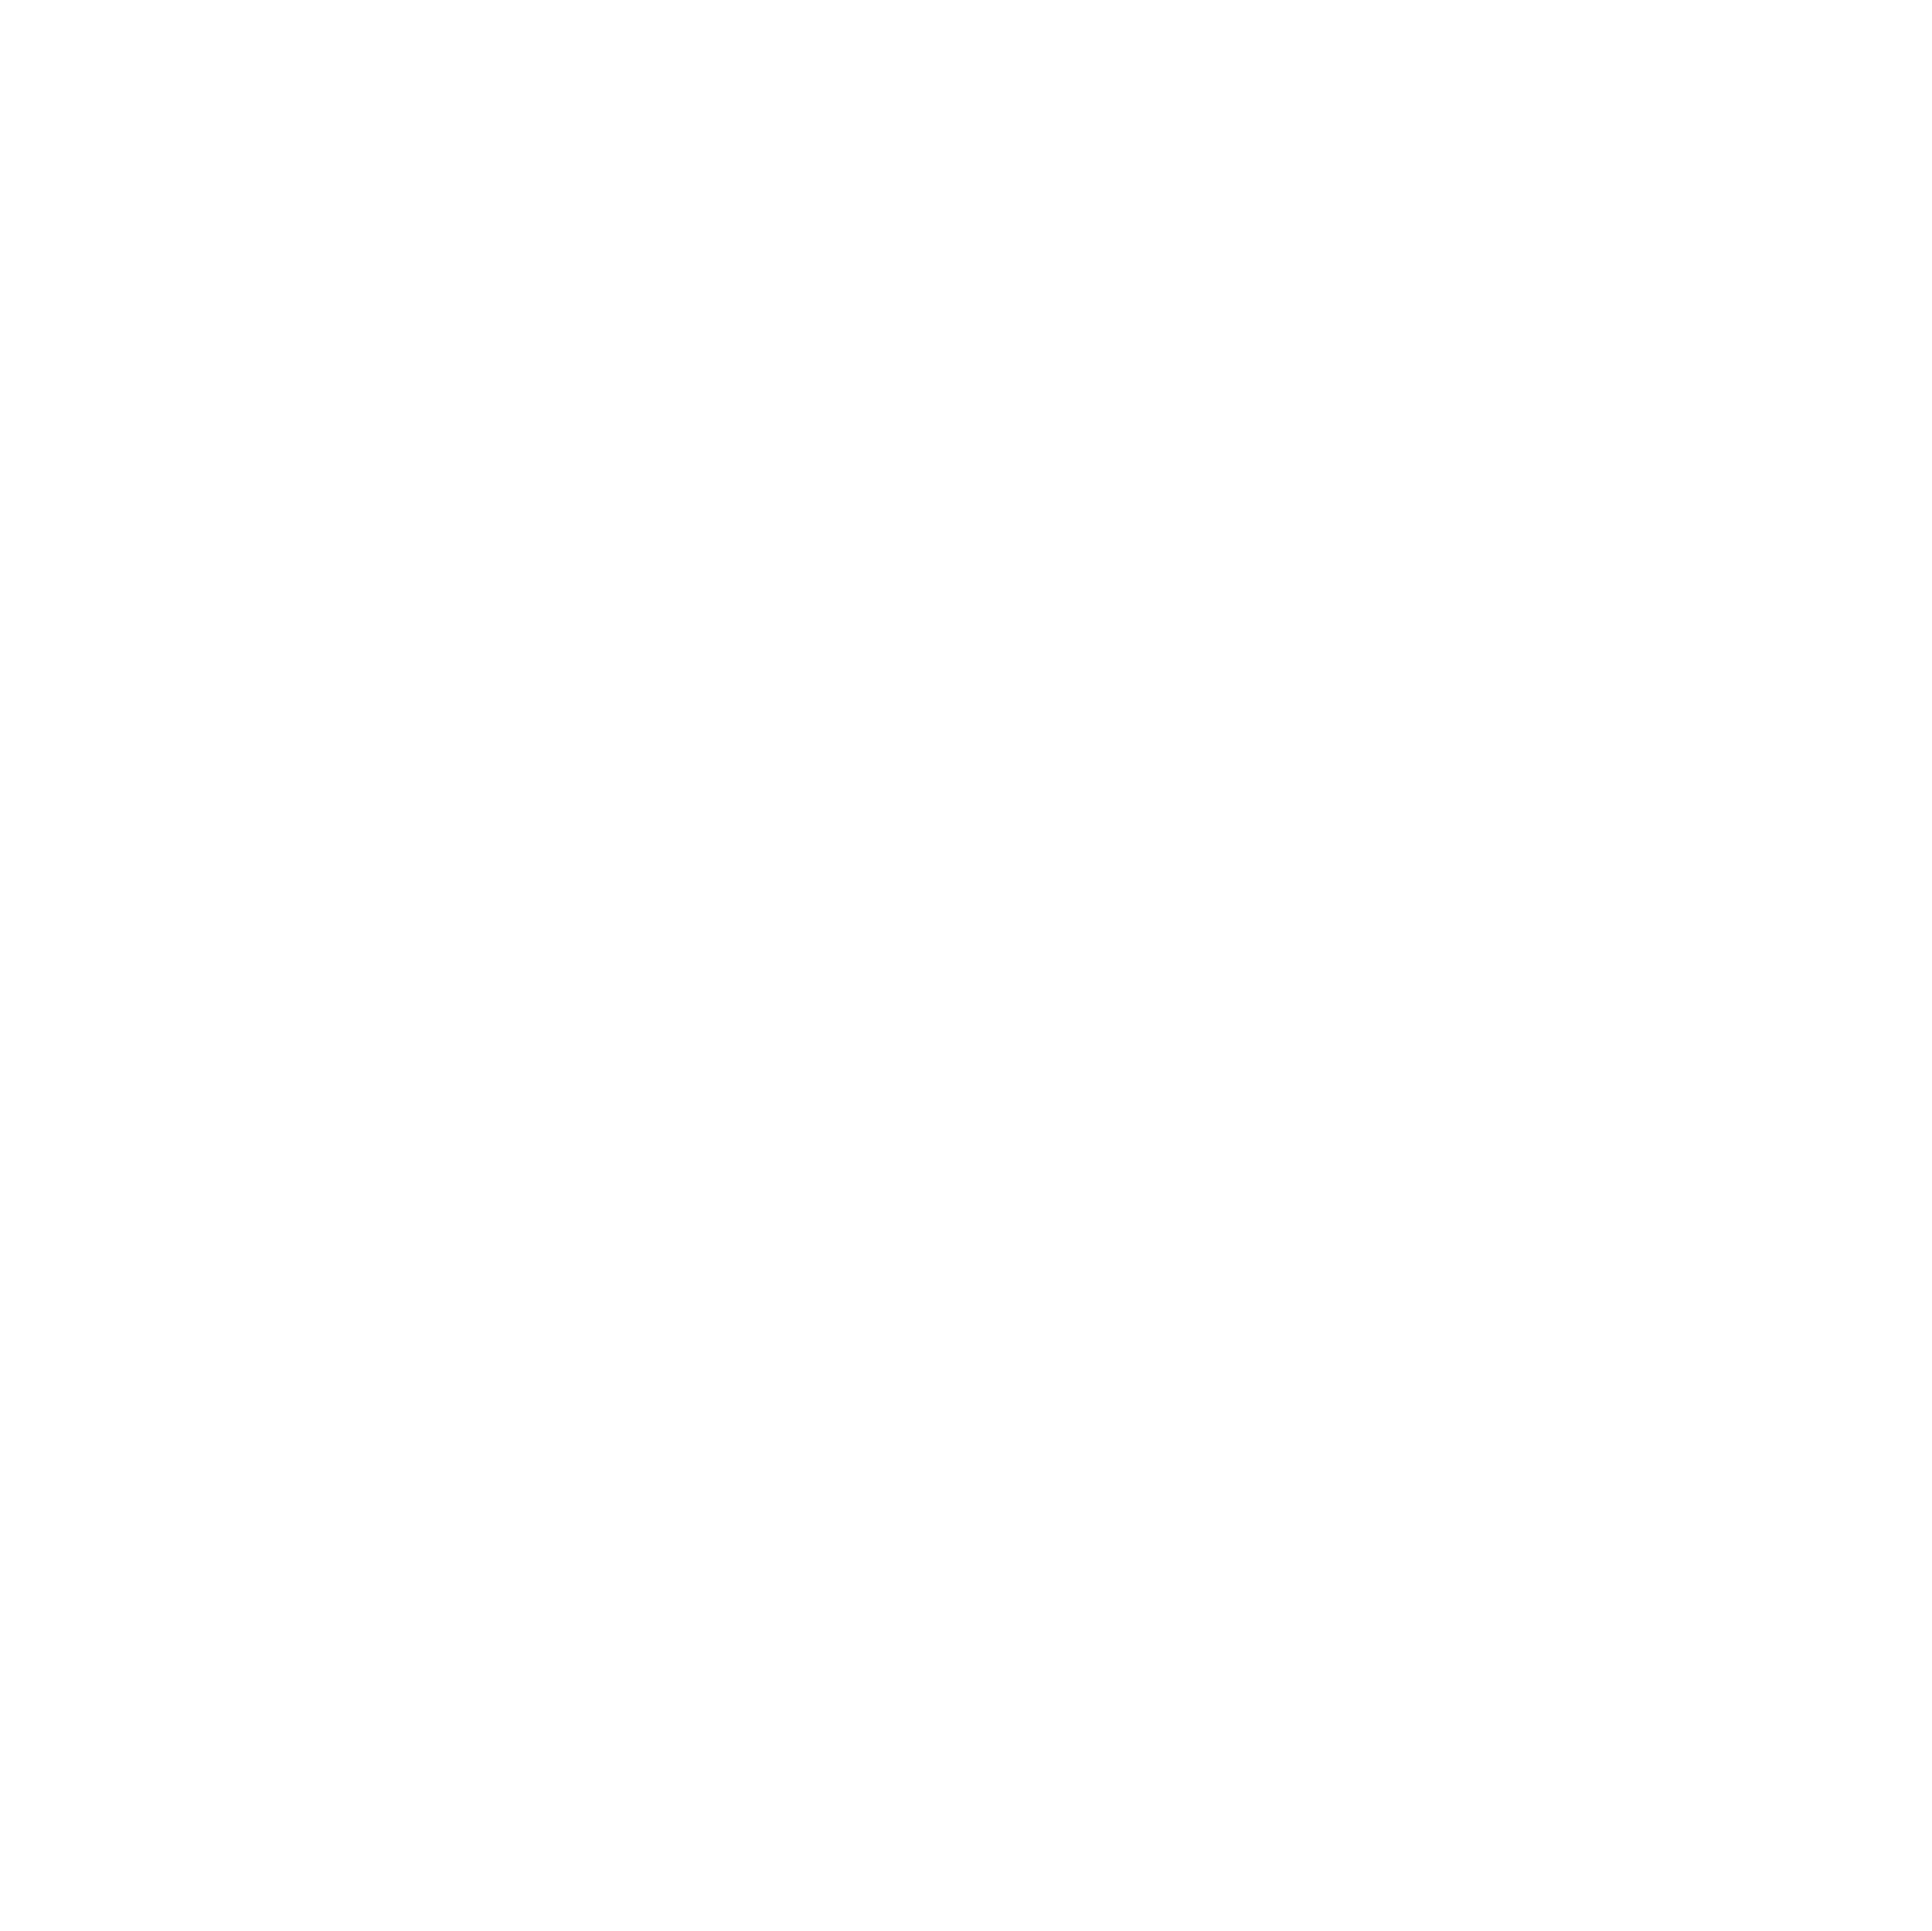 gslabs logo white